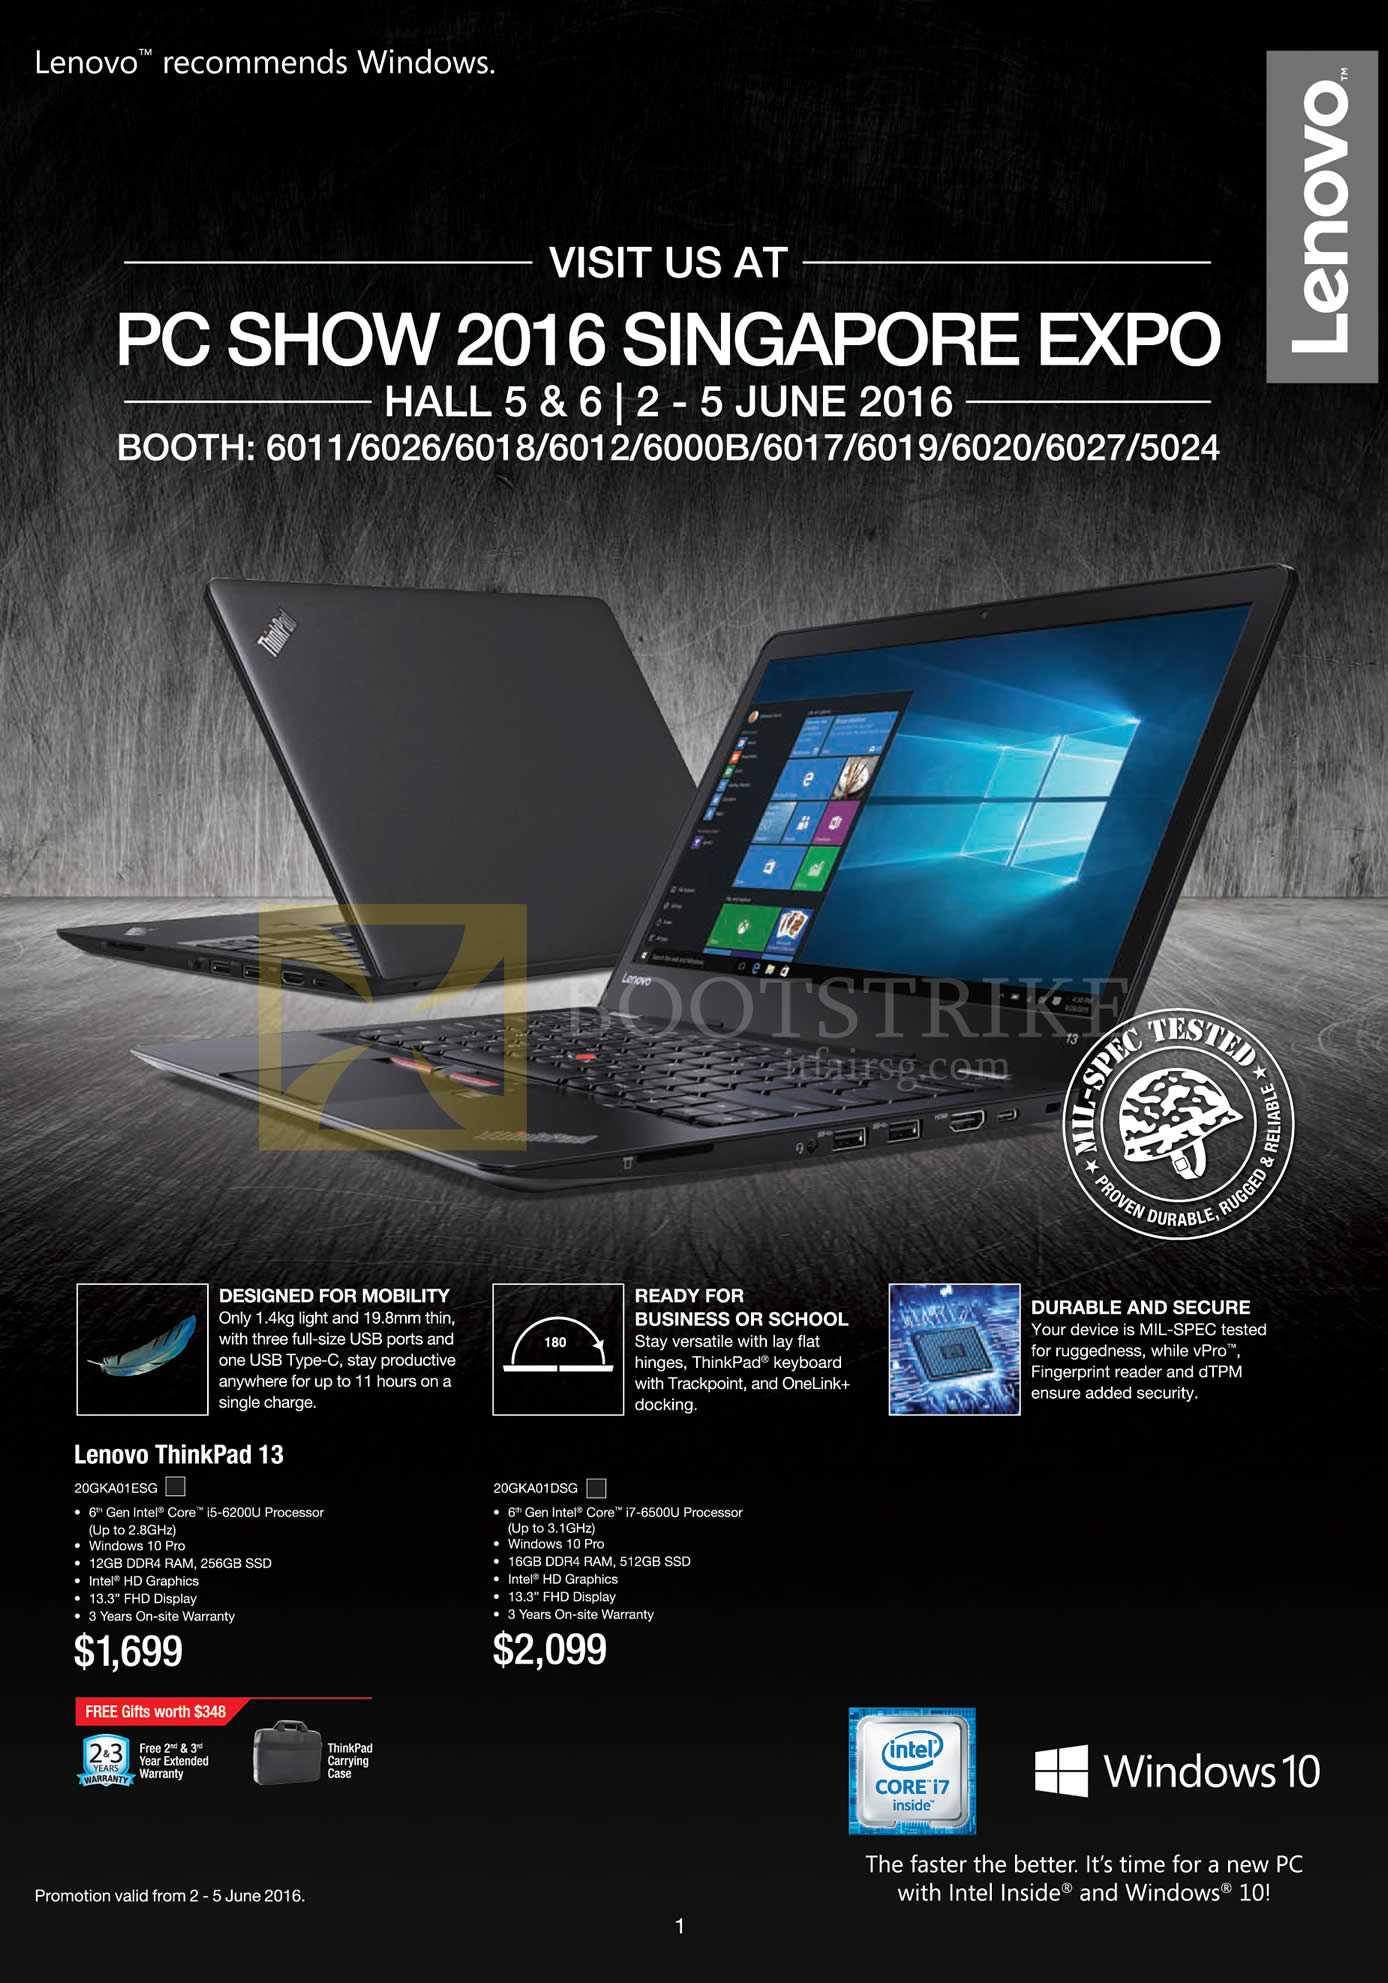 PC SHOW 2016 price list image brochure of Lenovo Notebooks Thinkpad 13